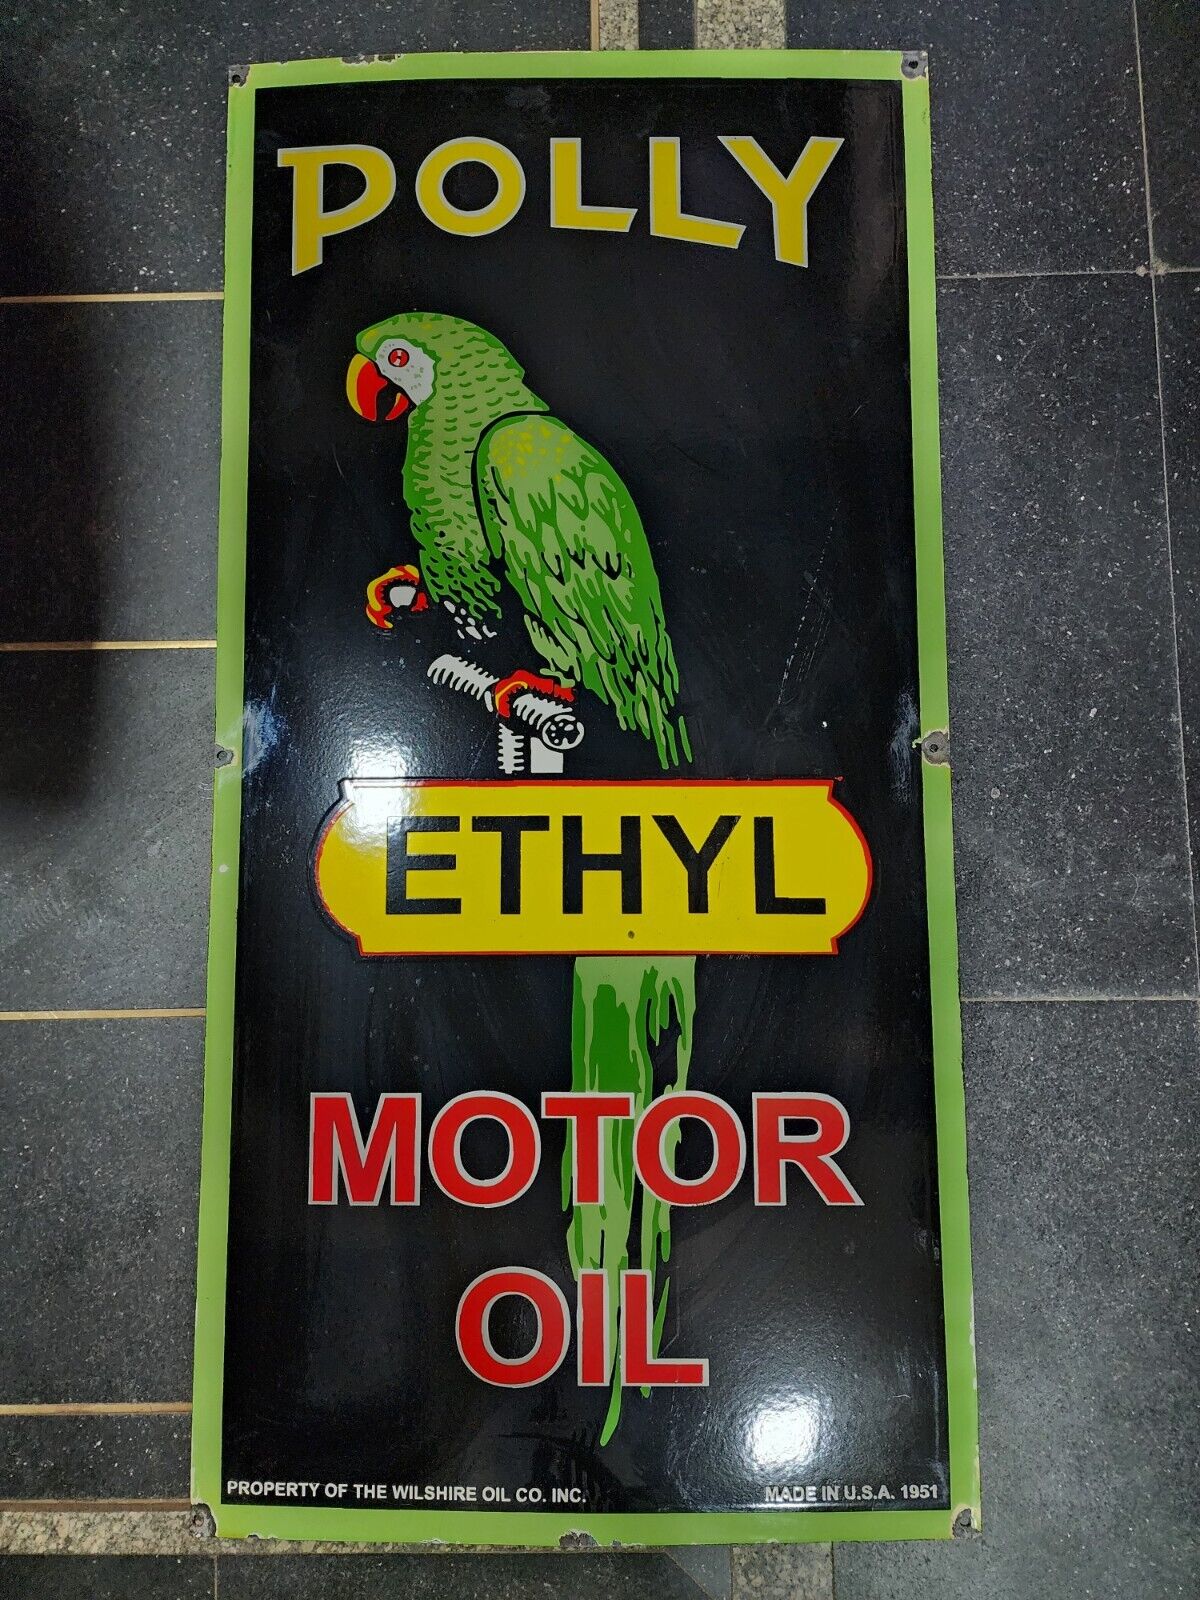 POLLY ETHYL MOTOR OIL PORCELAIN ENAMEL SIGN 48 X 24 INCHES